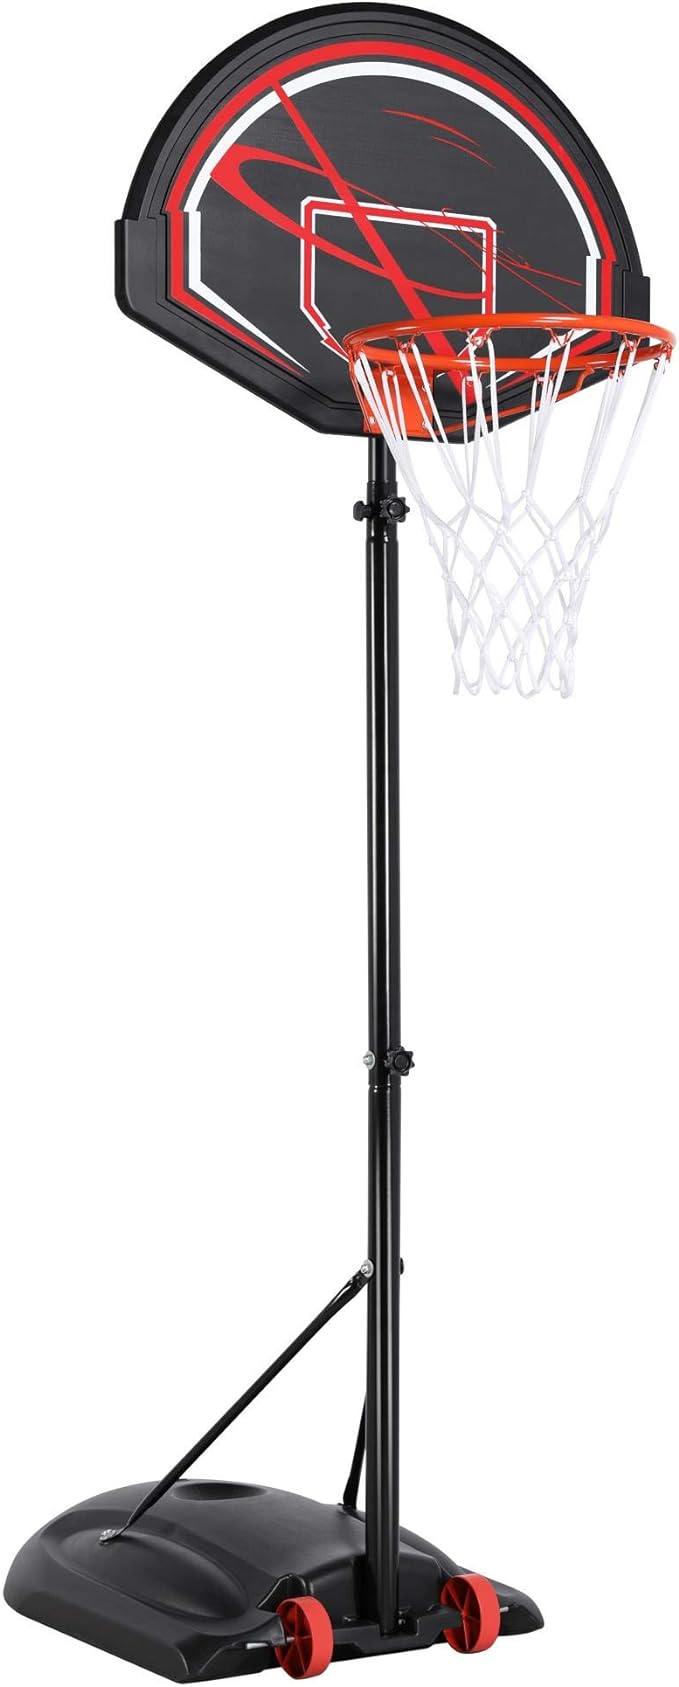 yaheetech 32 youth portable basketball hoop 7-9ft adjustable height  ‎yaheetech b08cdxky33